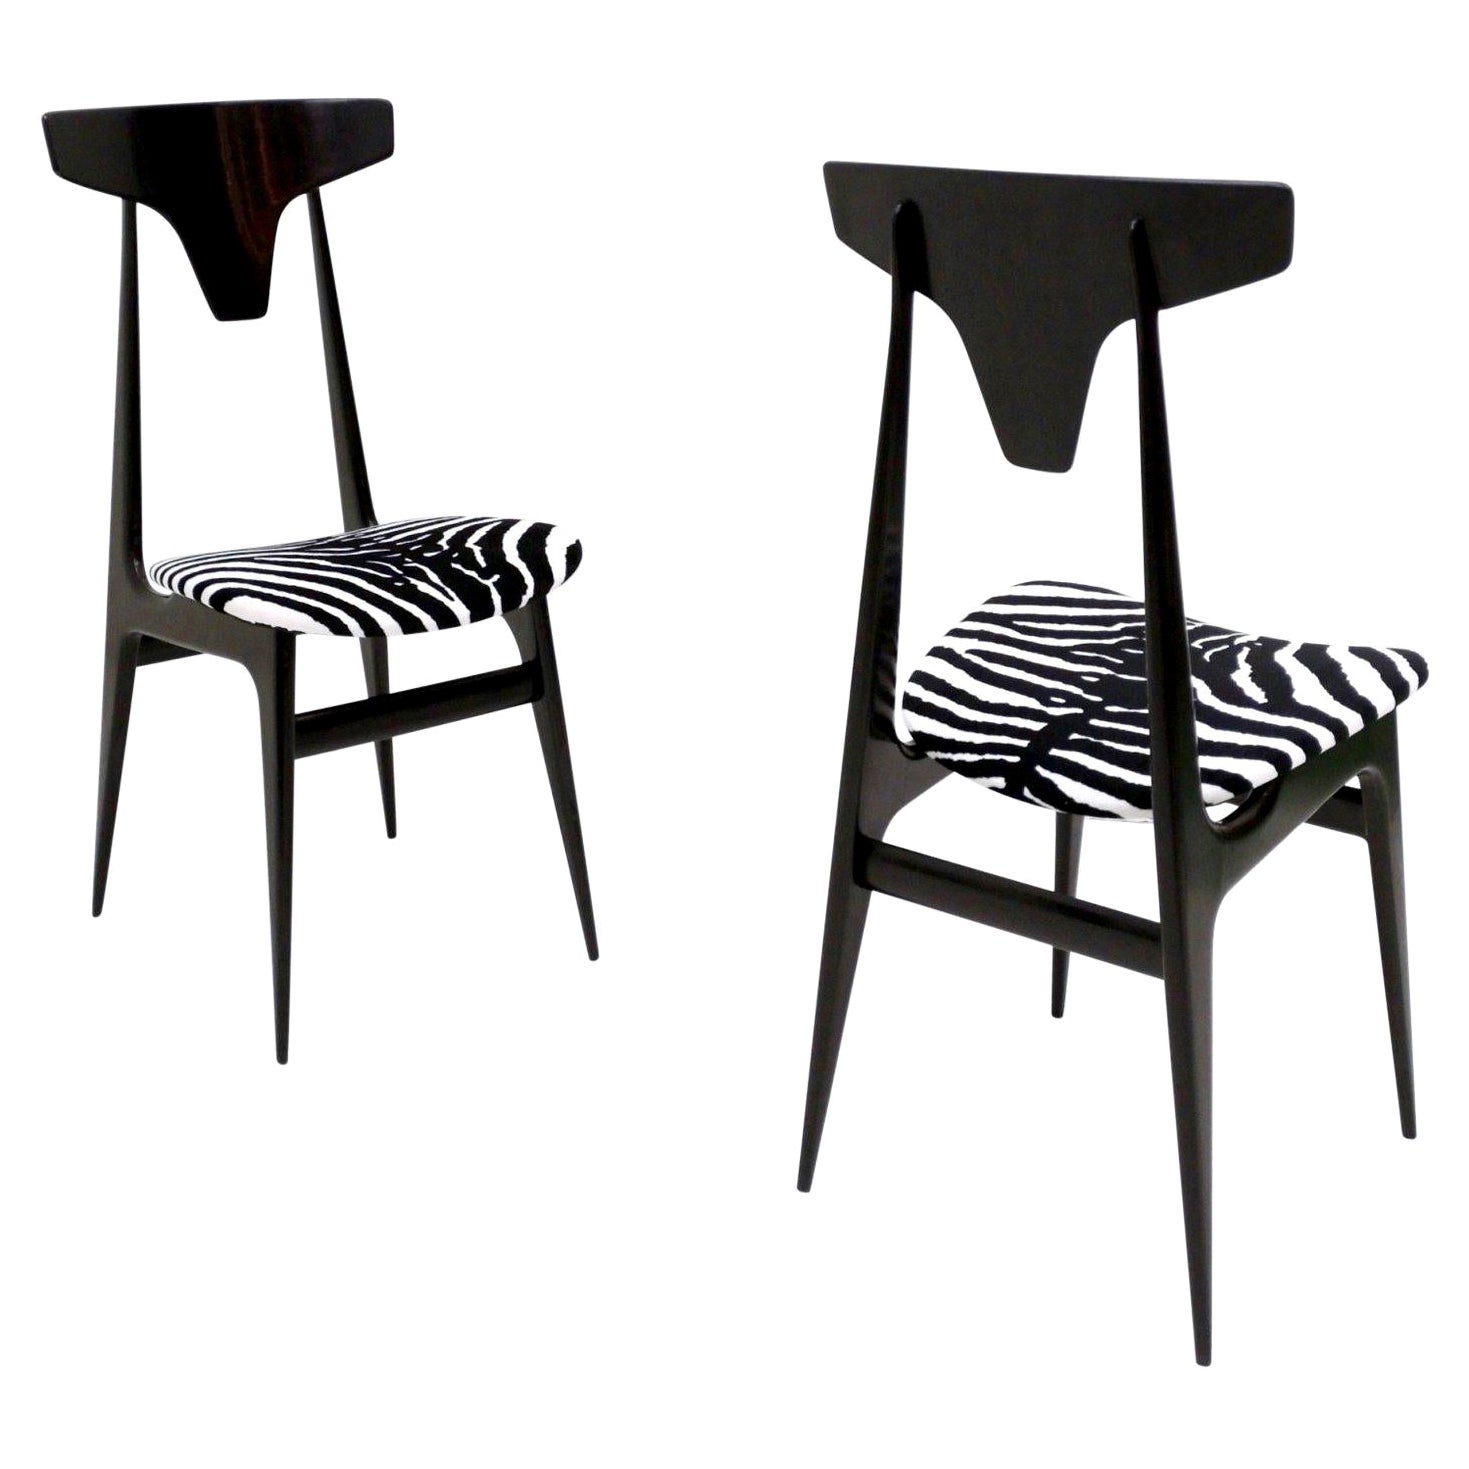 Pair of Vintage Zebra Print Velvet Side Chairs with Ebonized Wood Frame, Italy